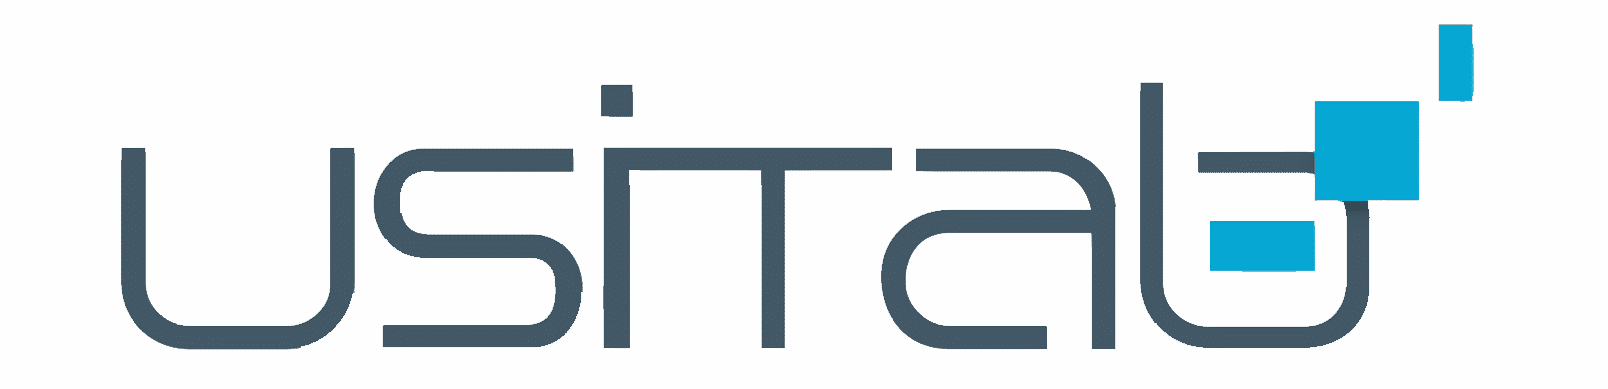 usitab logo